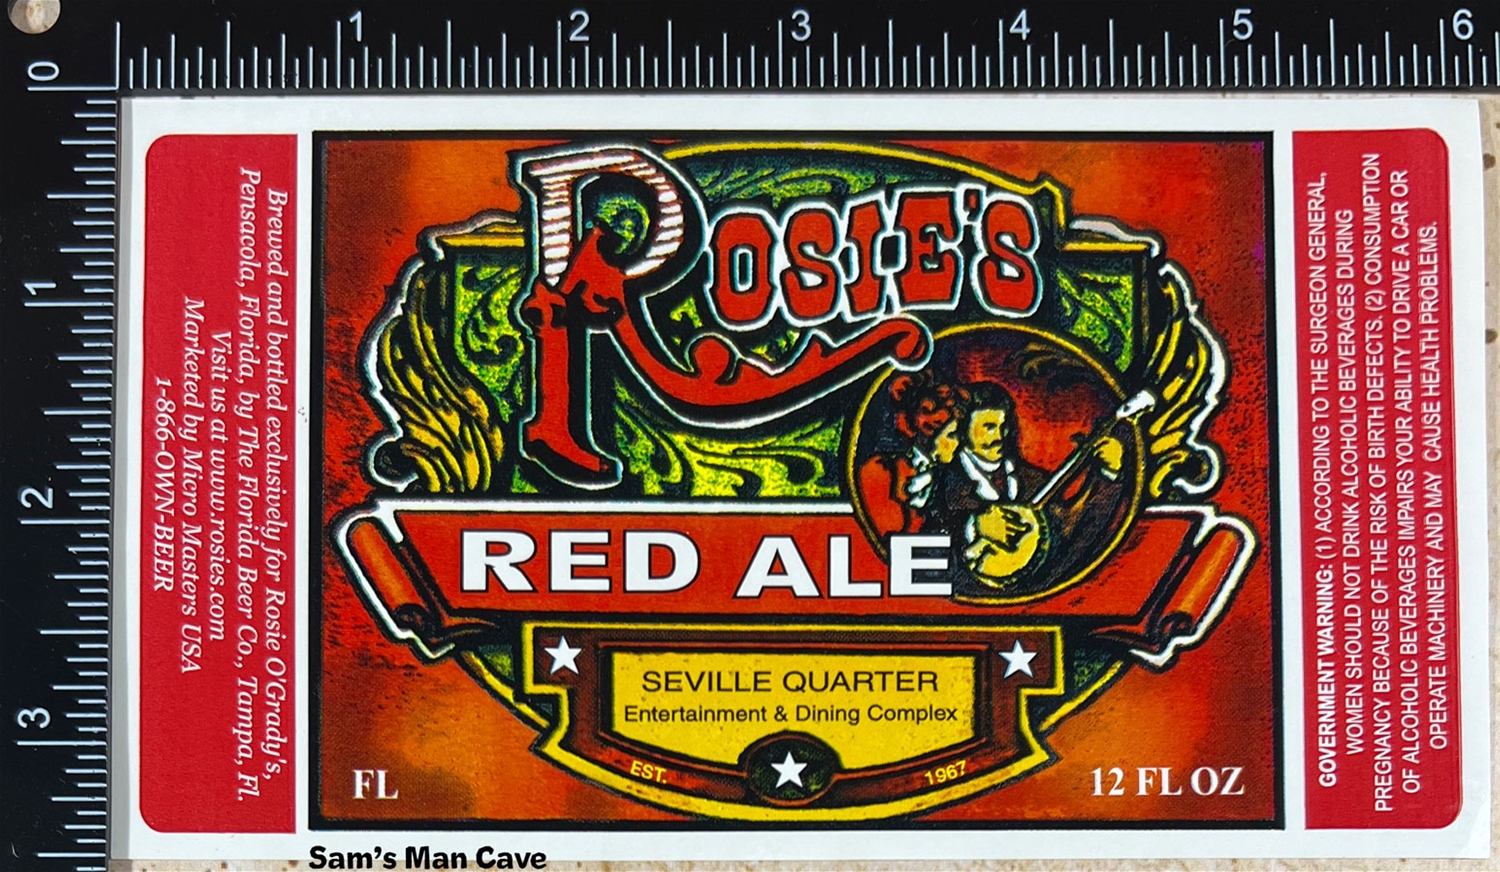 Rosie's Red Ale Beer Label